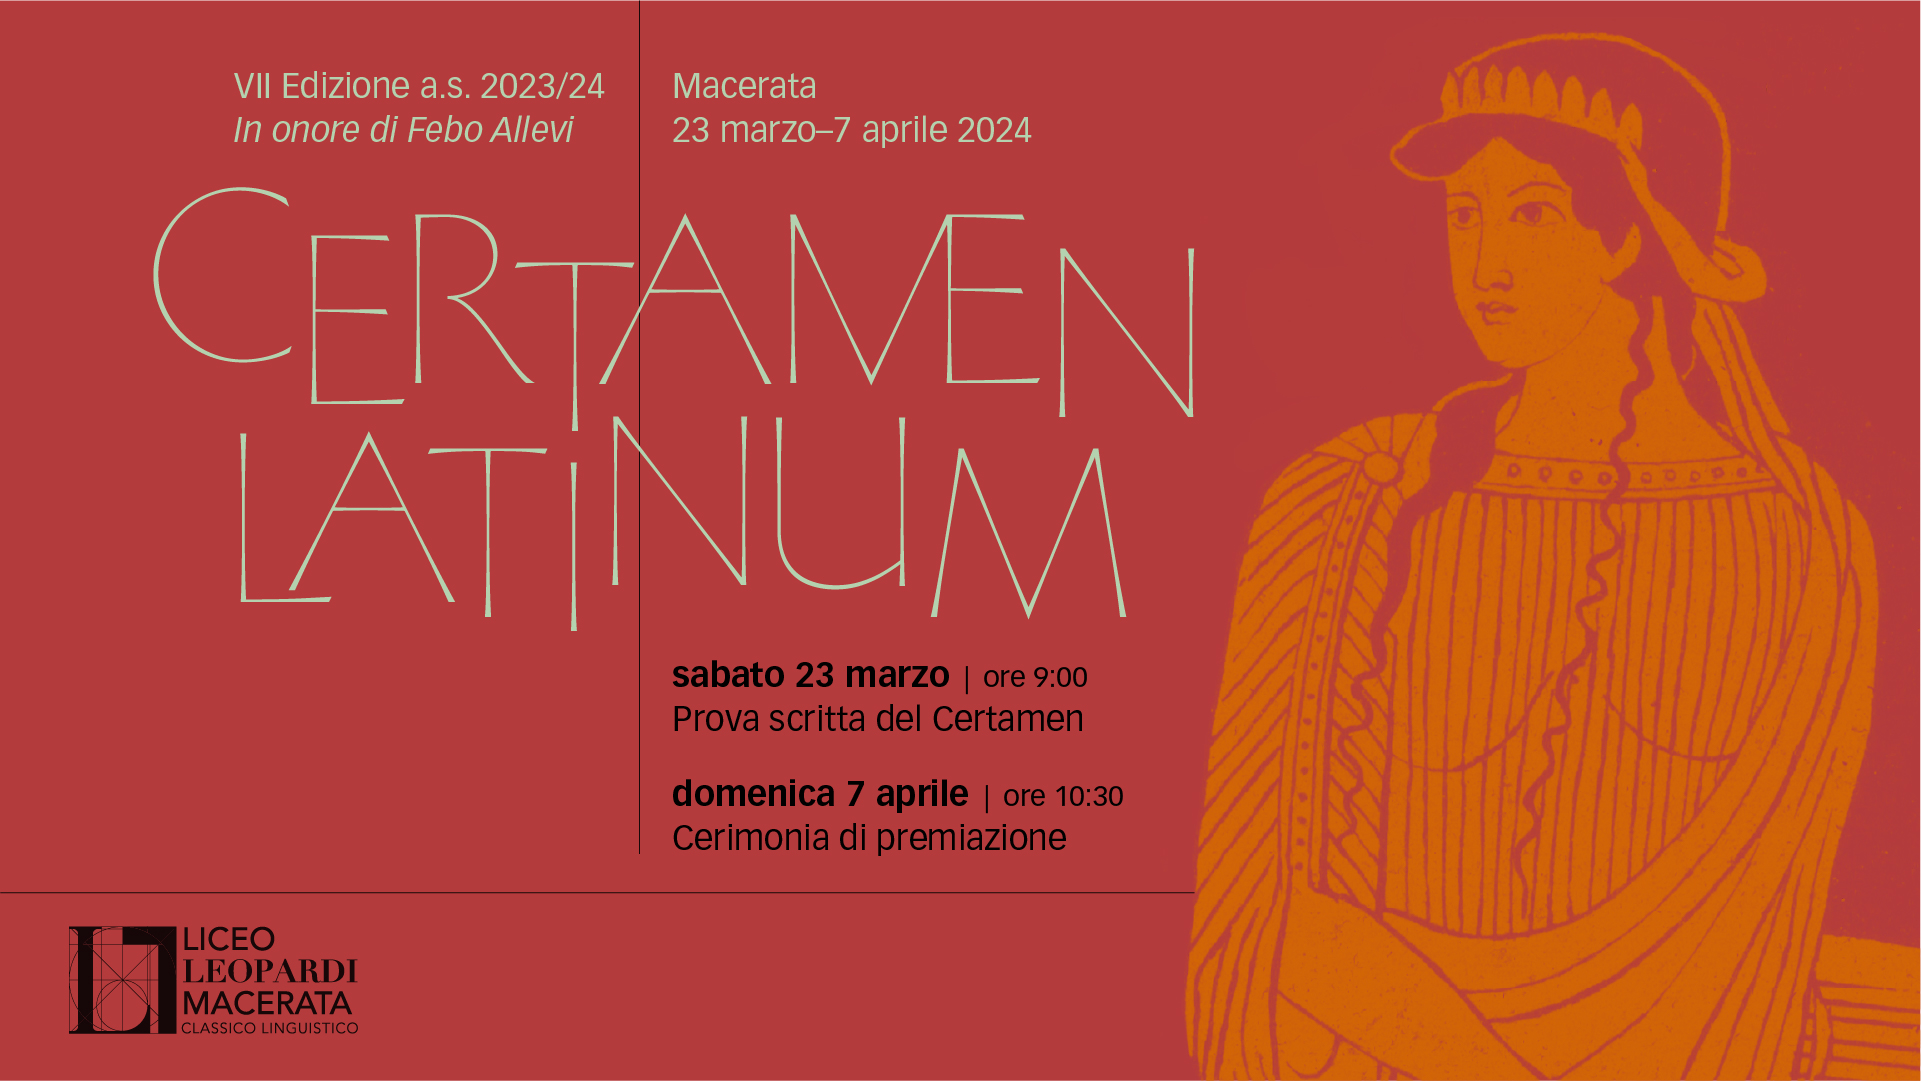 Certamen Latinum - VII Edizione 2024, 7 aprile - Liceo Statale G. Leopardi Macerata